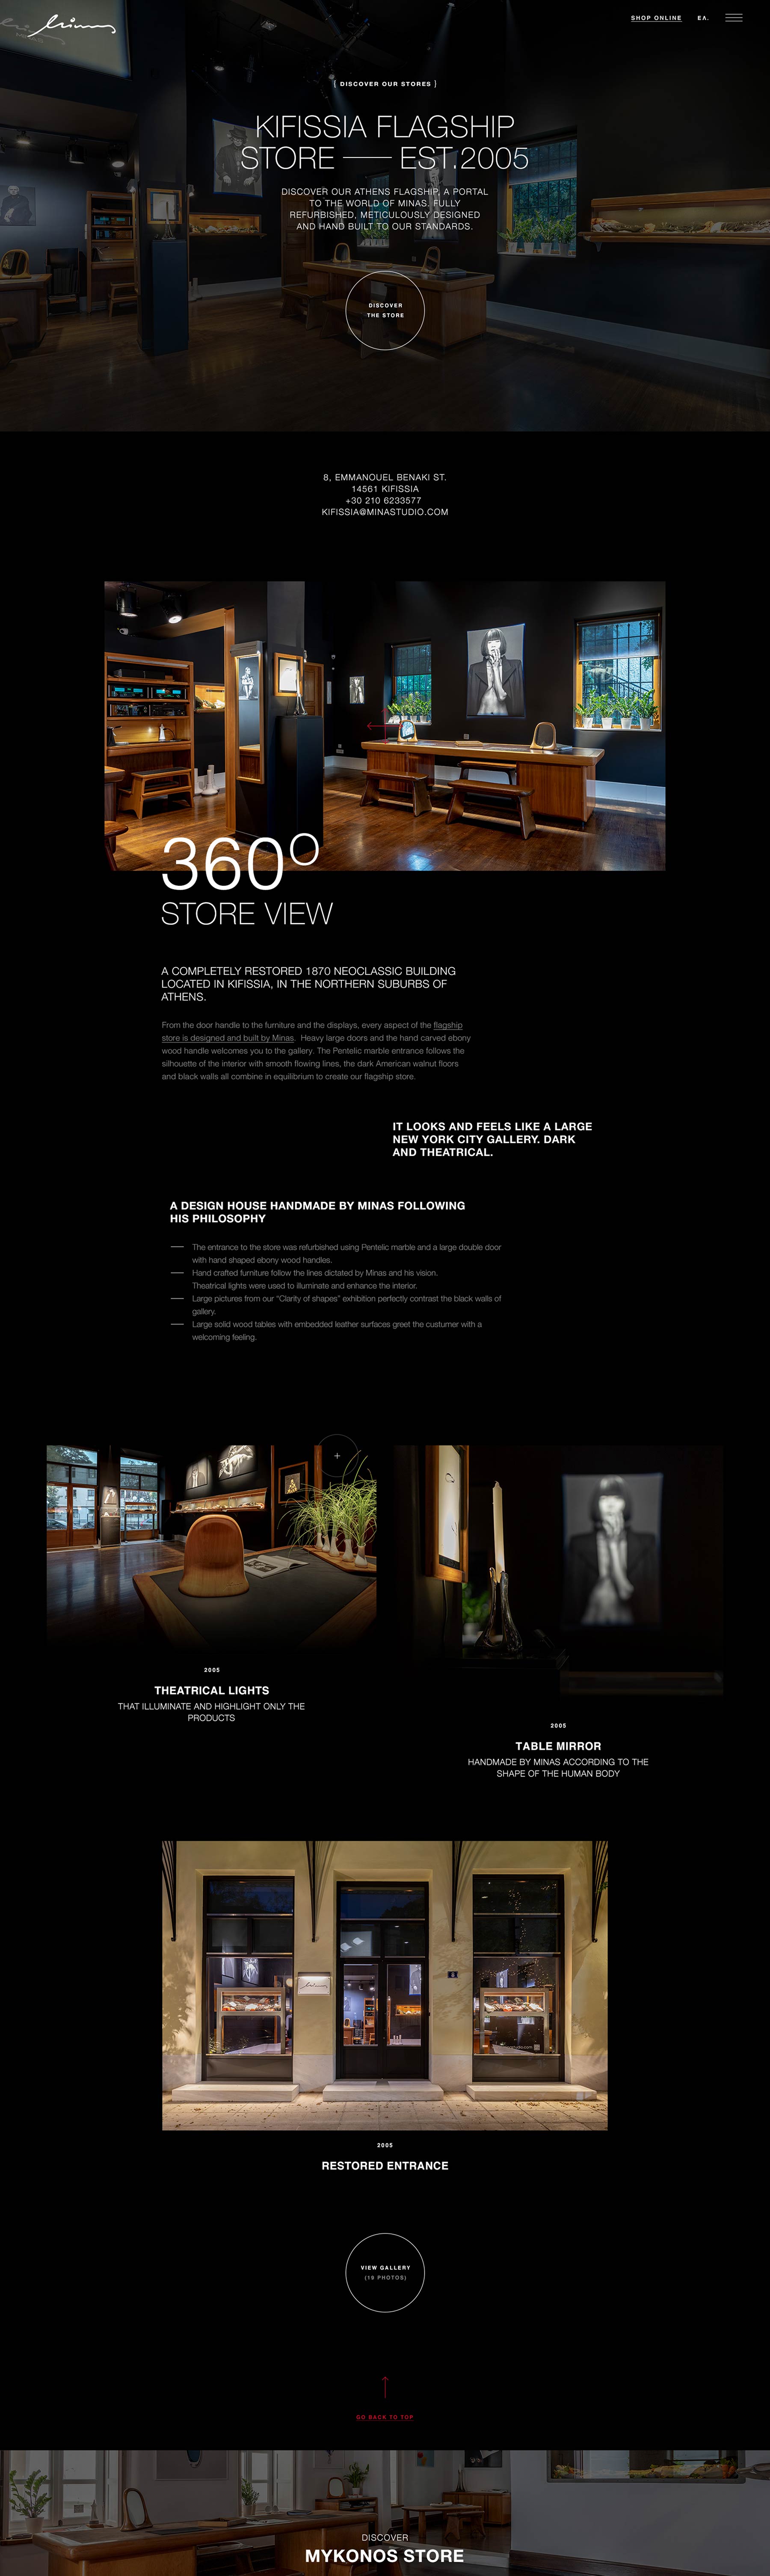 minas website design stores kommigraphics